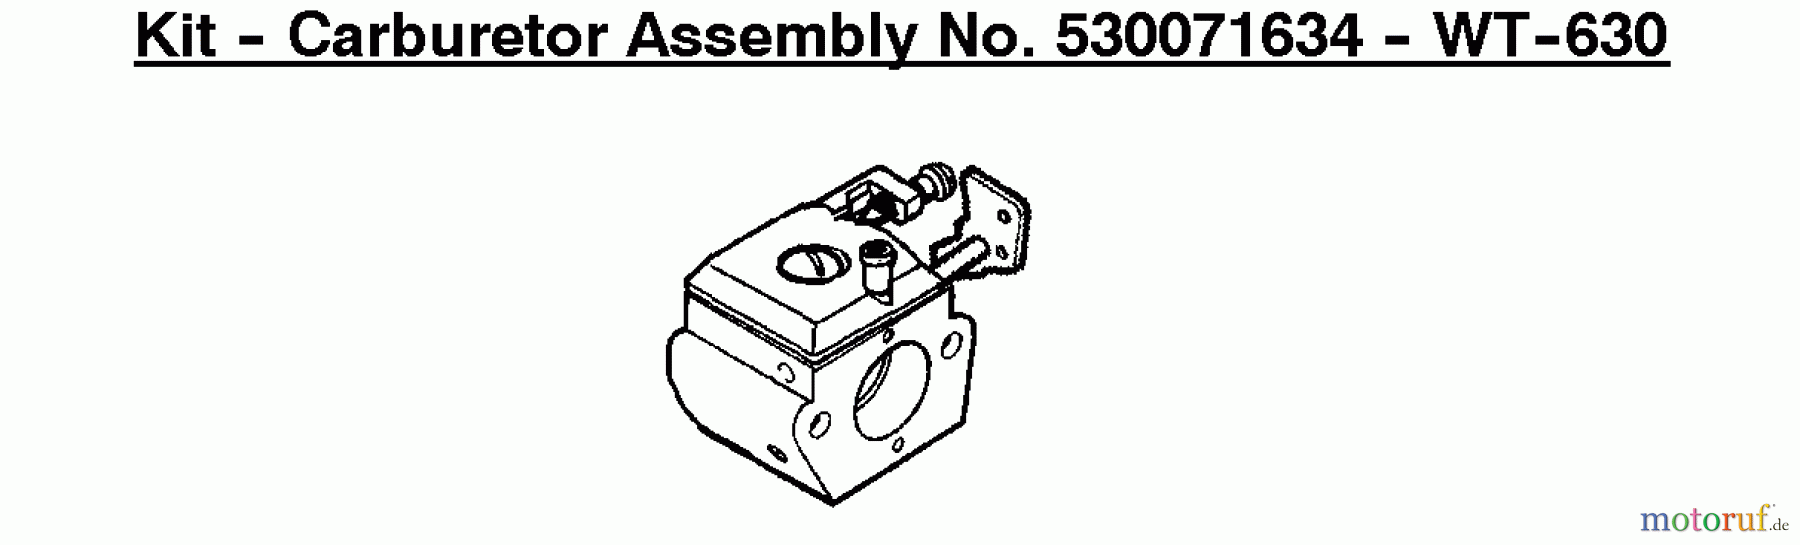  Poulan / Weed Eater Kantenschneider PE550 (Type 5) - Weed Eater Edger Kit - Carburetor Assembly